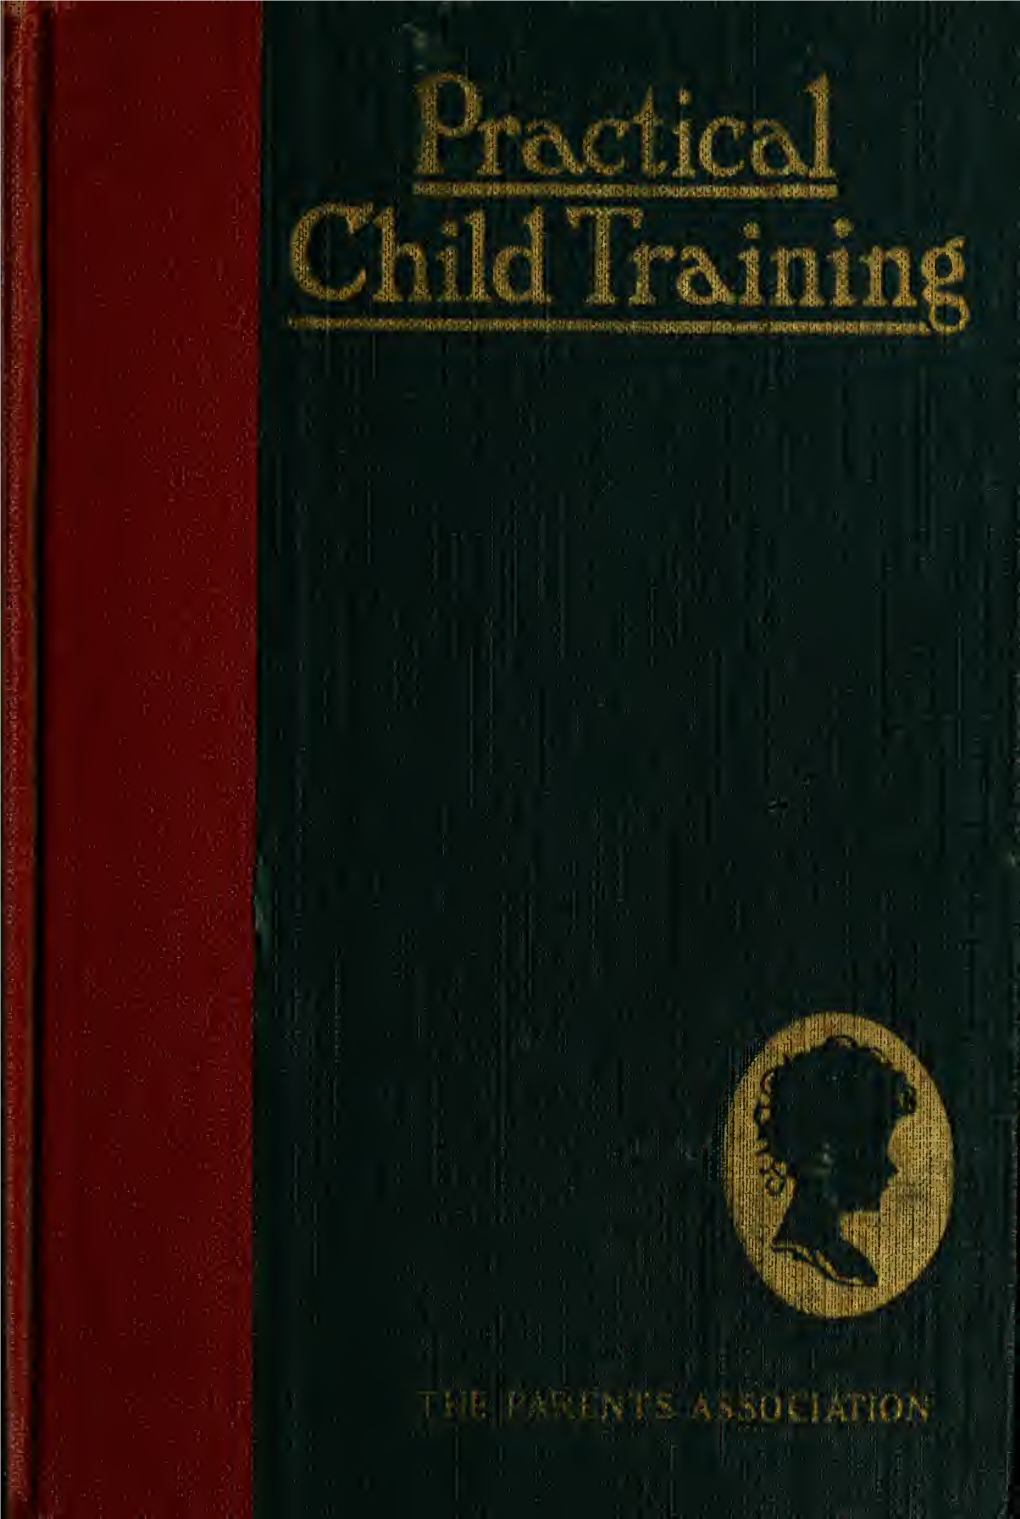 Practical Child Training